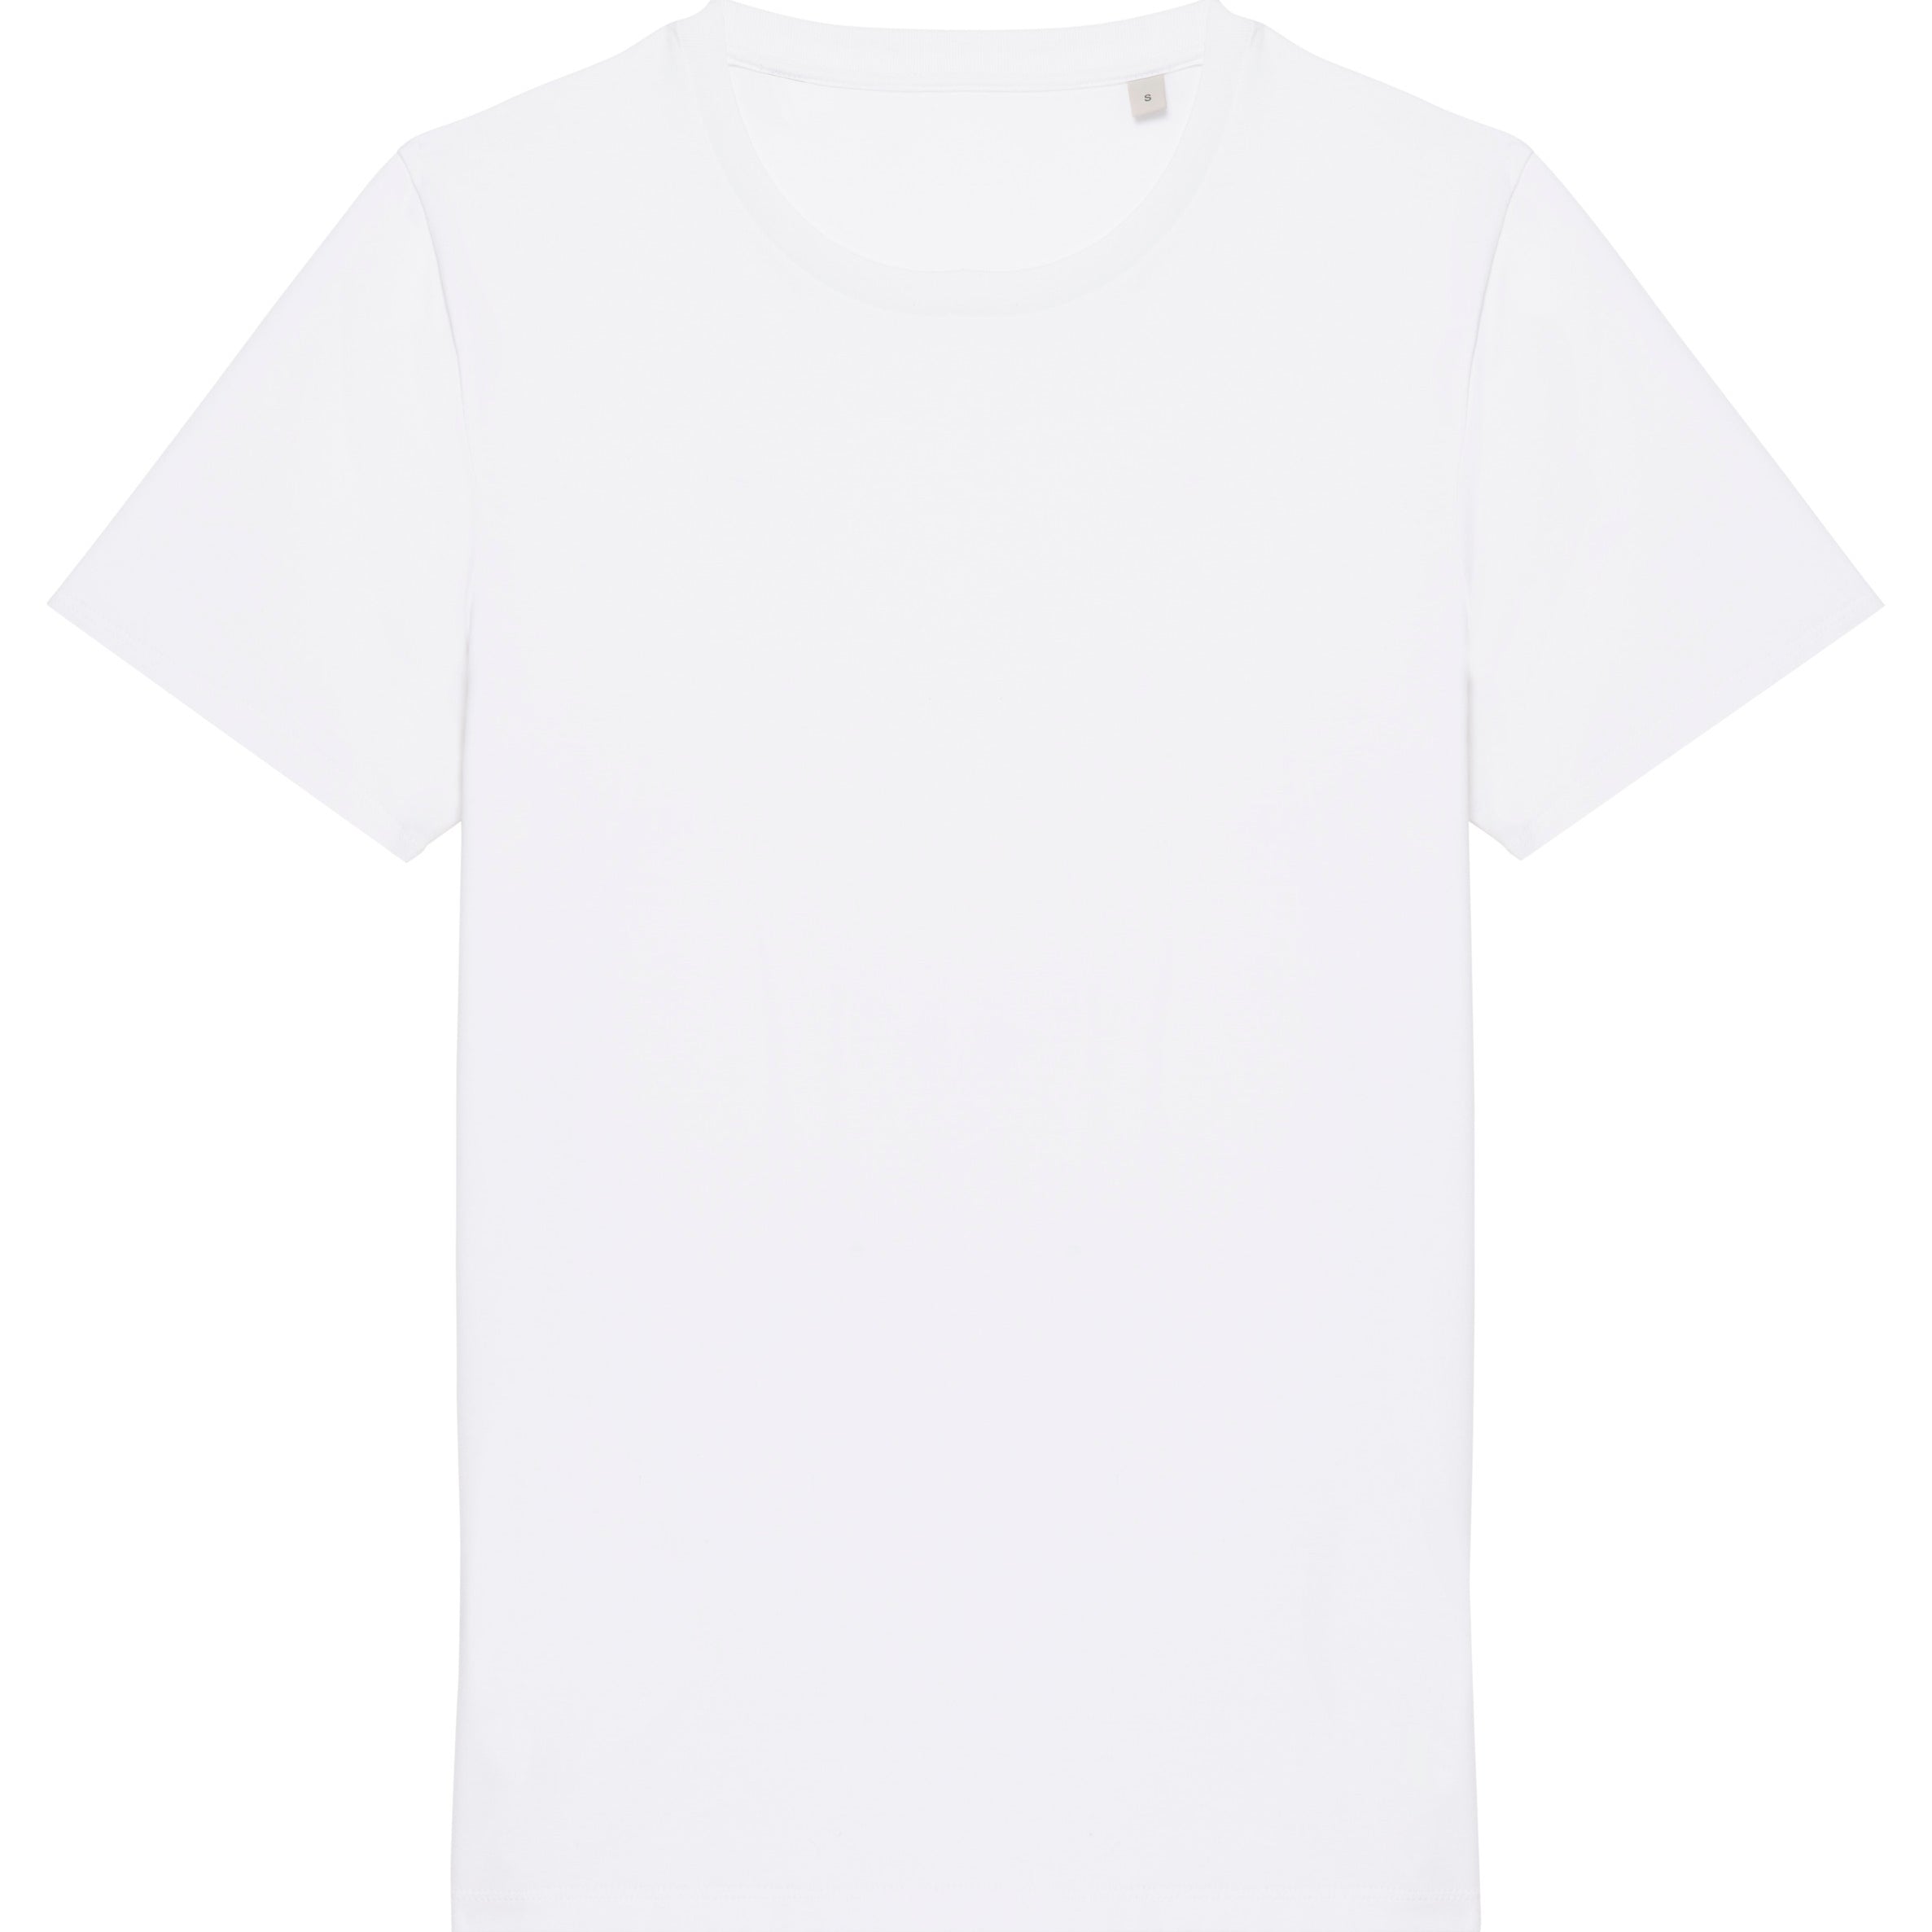 POSNS314IC Eco-friendly Unisex T-Shirt